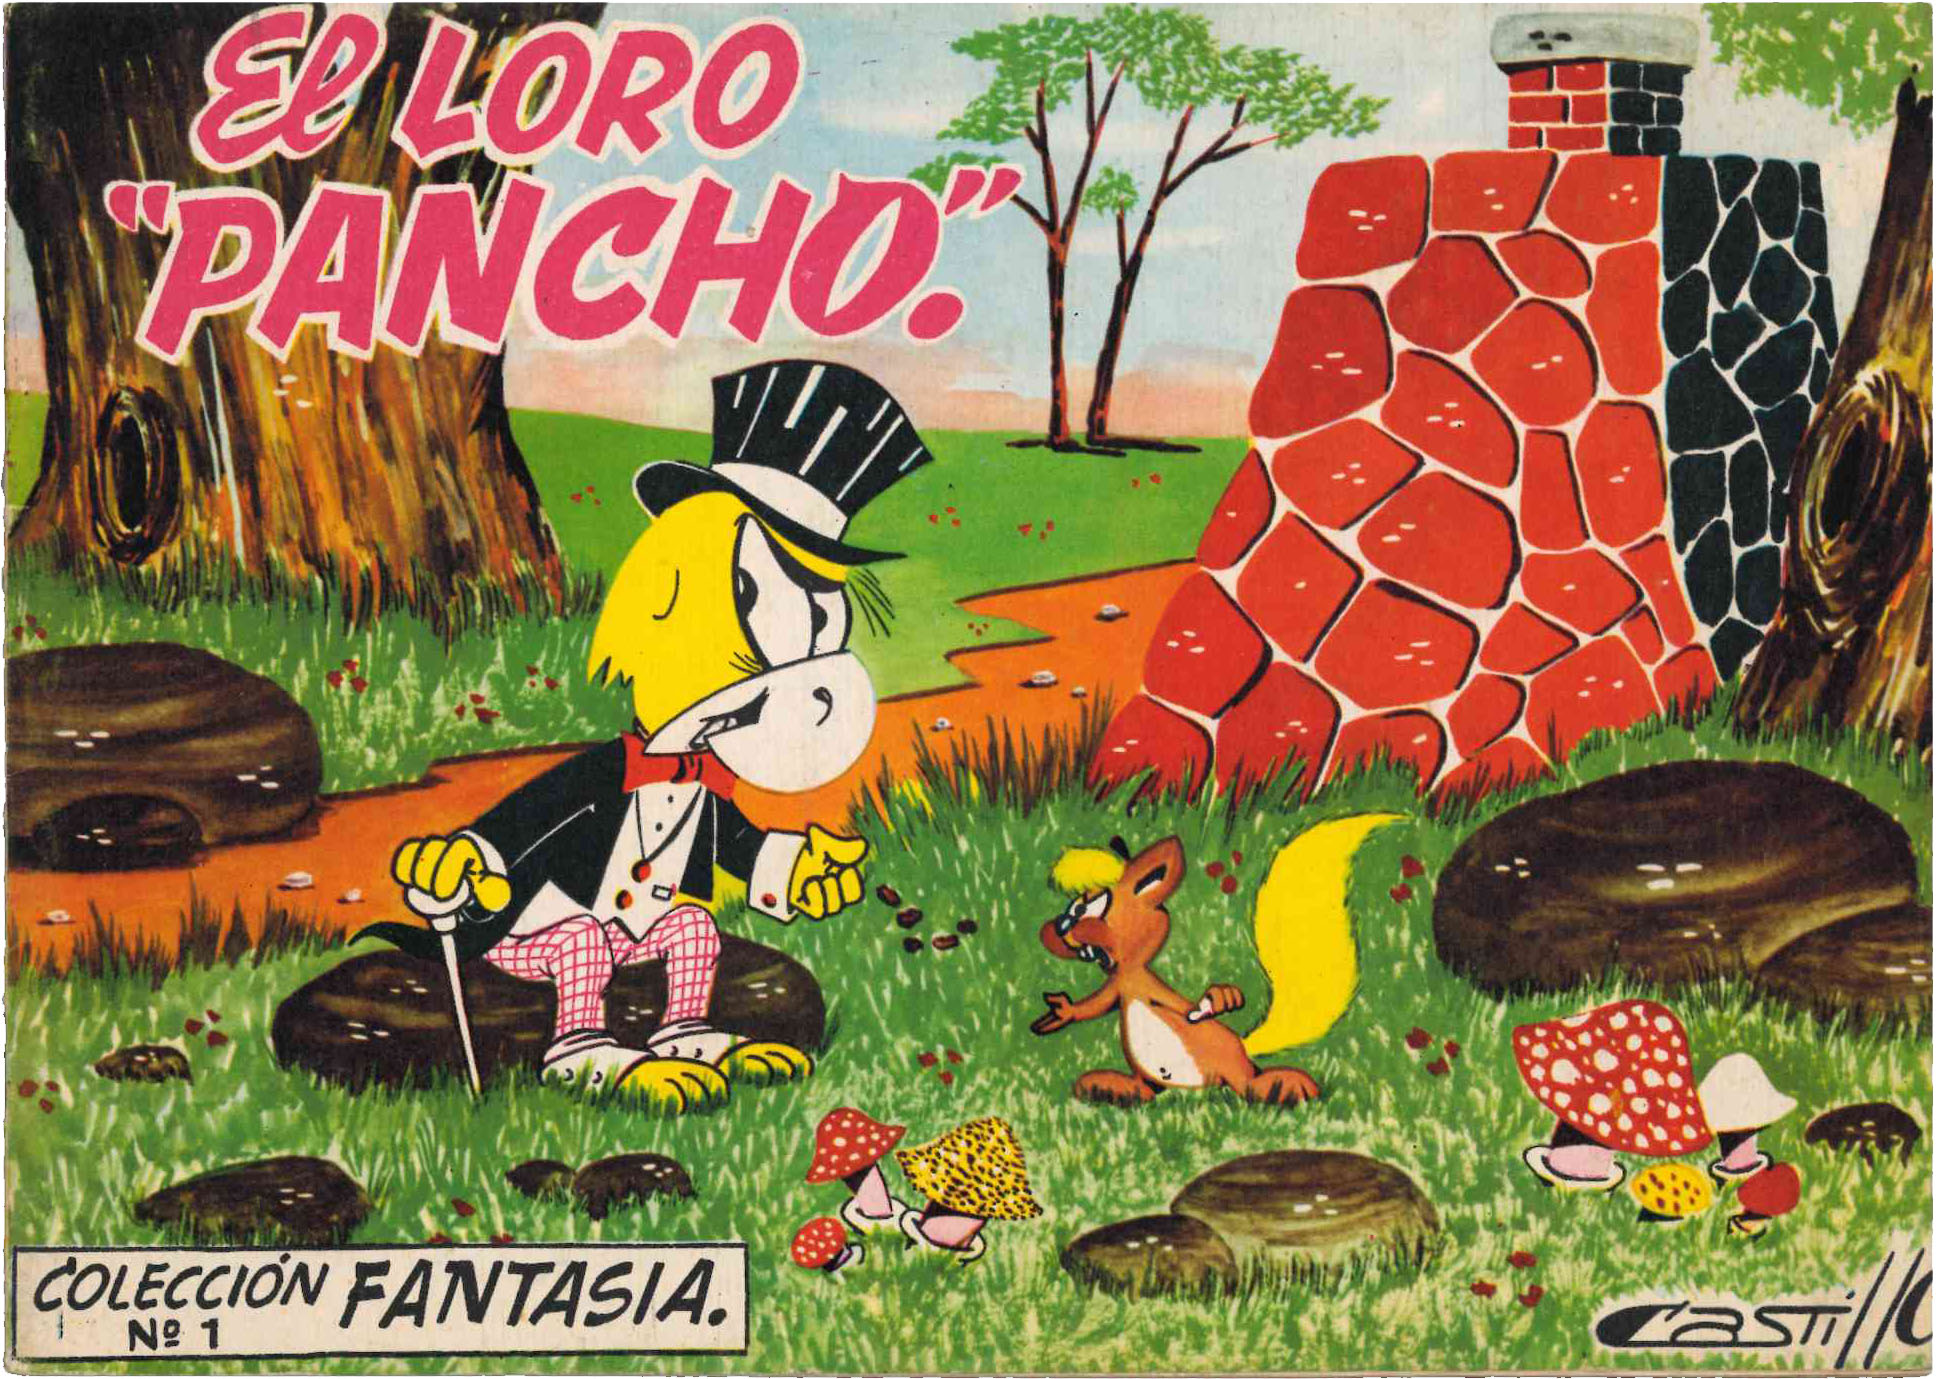 Cunto. Colección Fantasia nº 1. El Loro Pancho. Editorial Olivé y Hontoria. (25X17) RARO